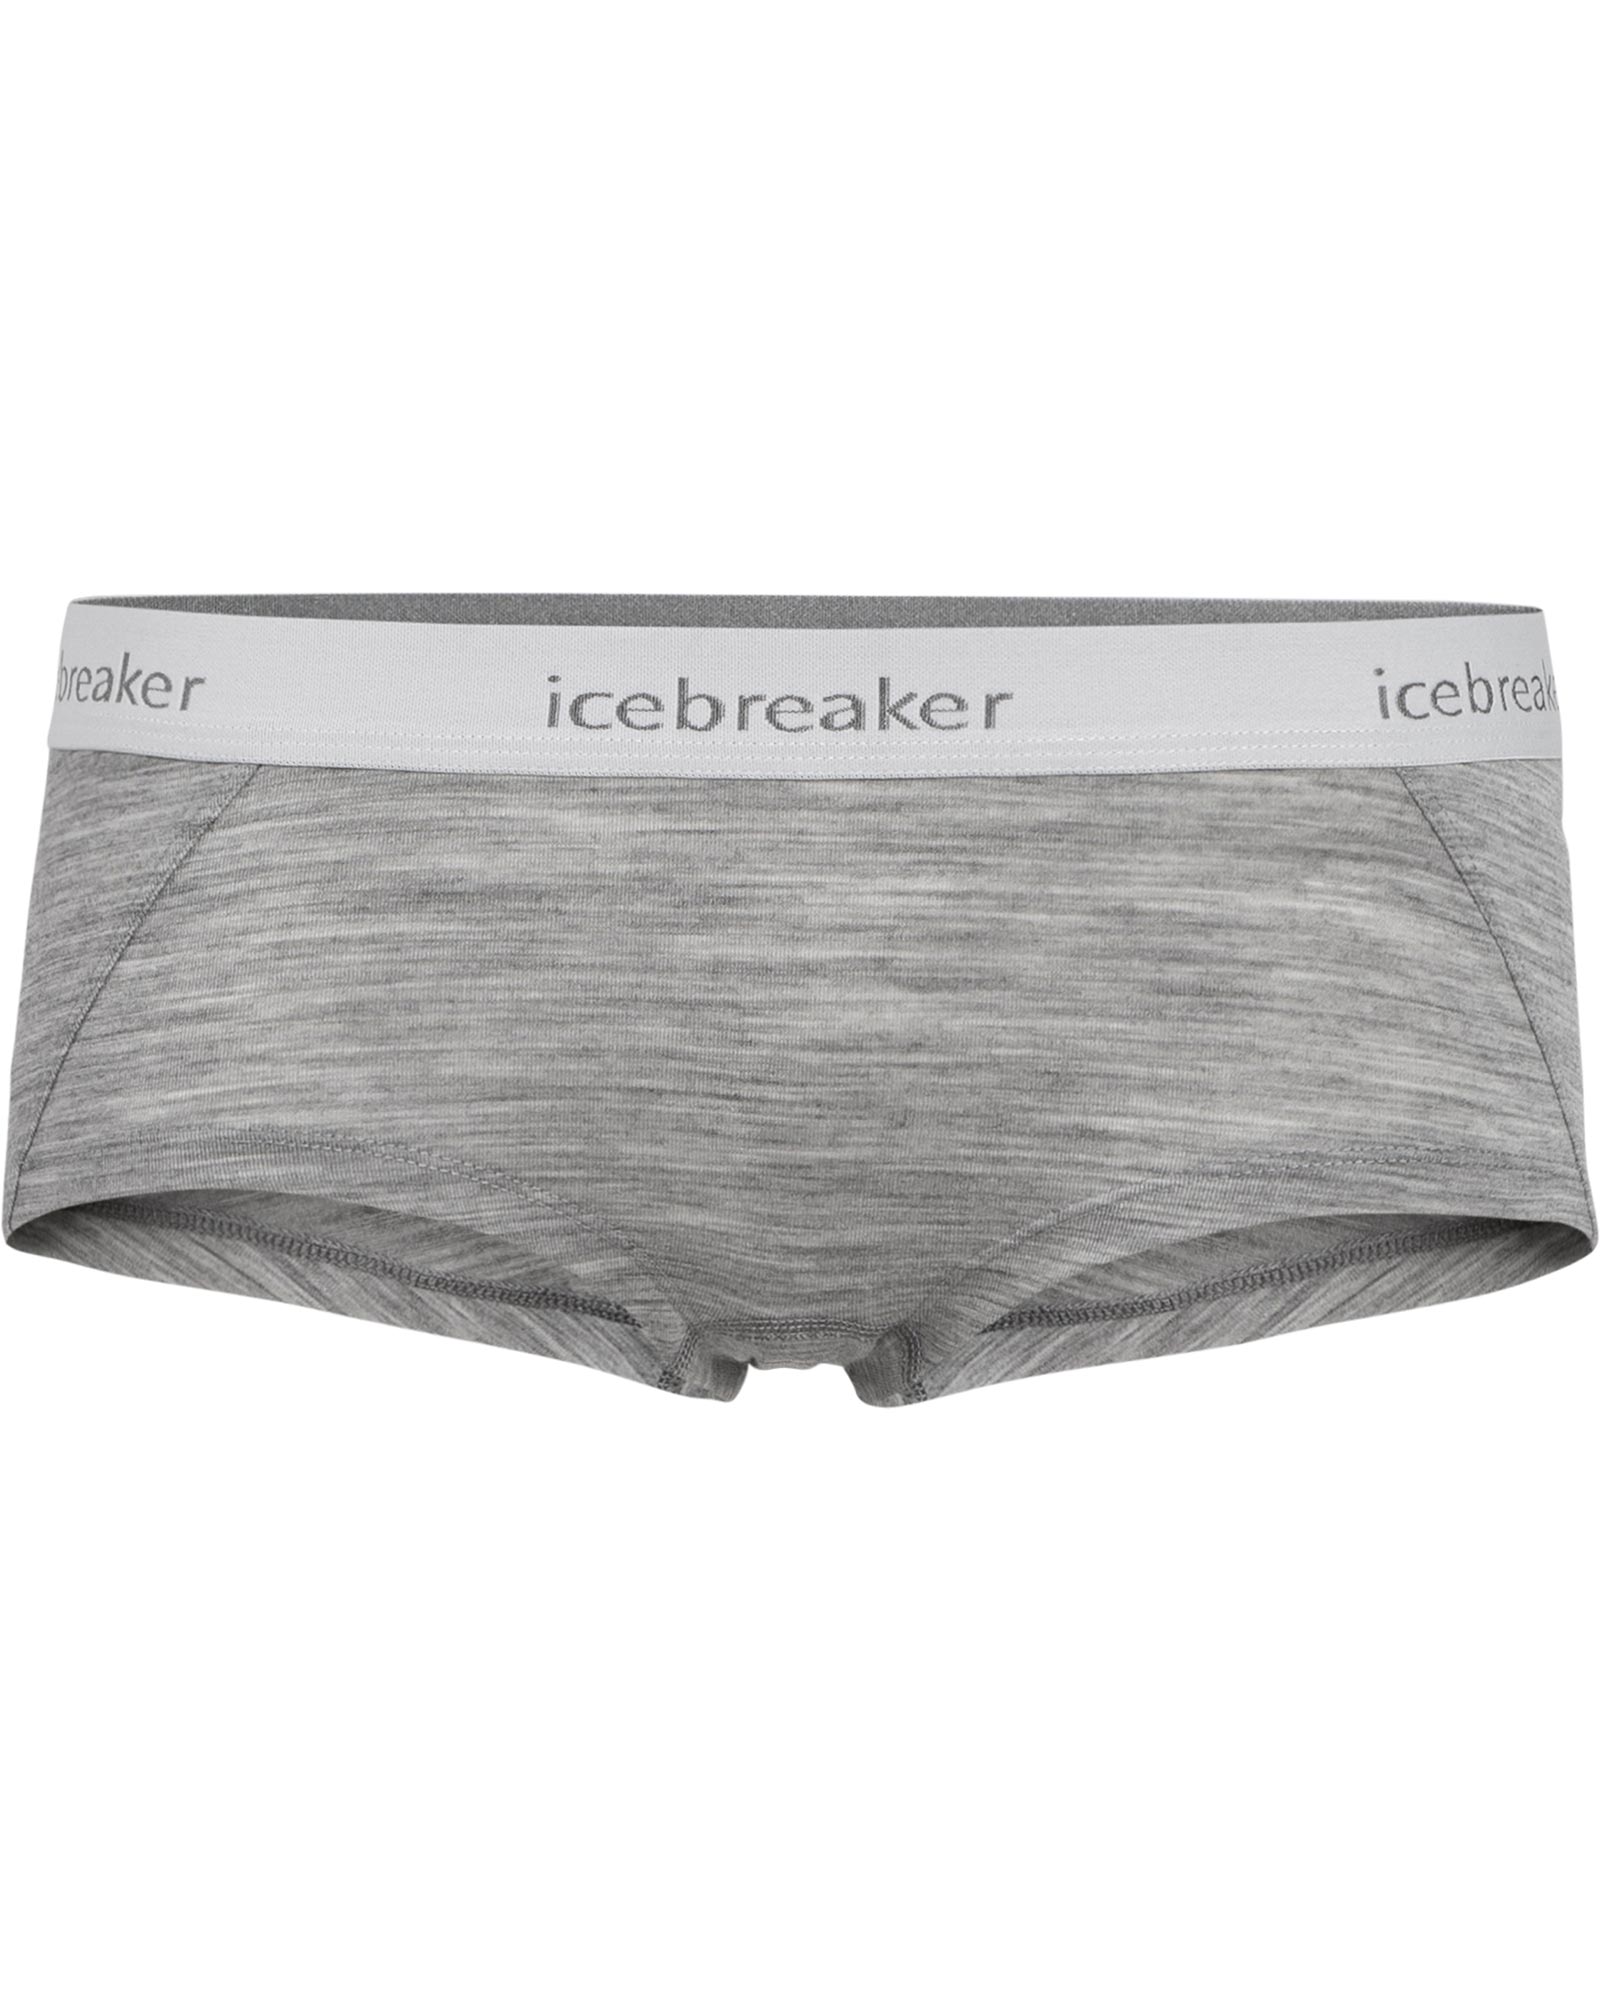 icebreaker Women's Merino Sprite 150 Hot Pants